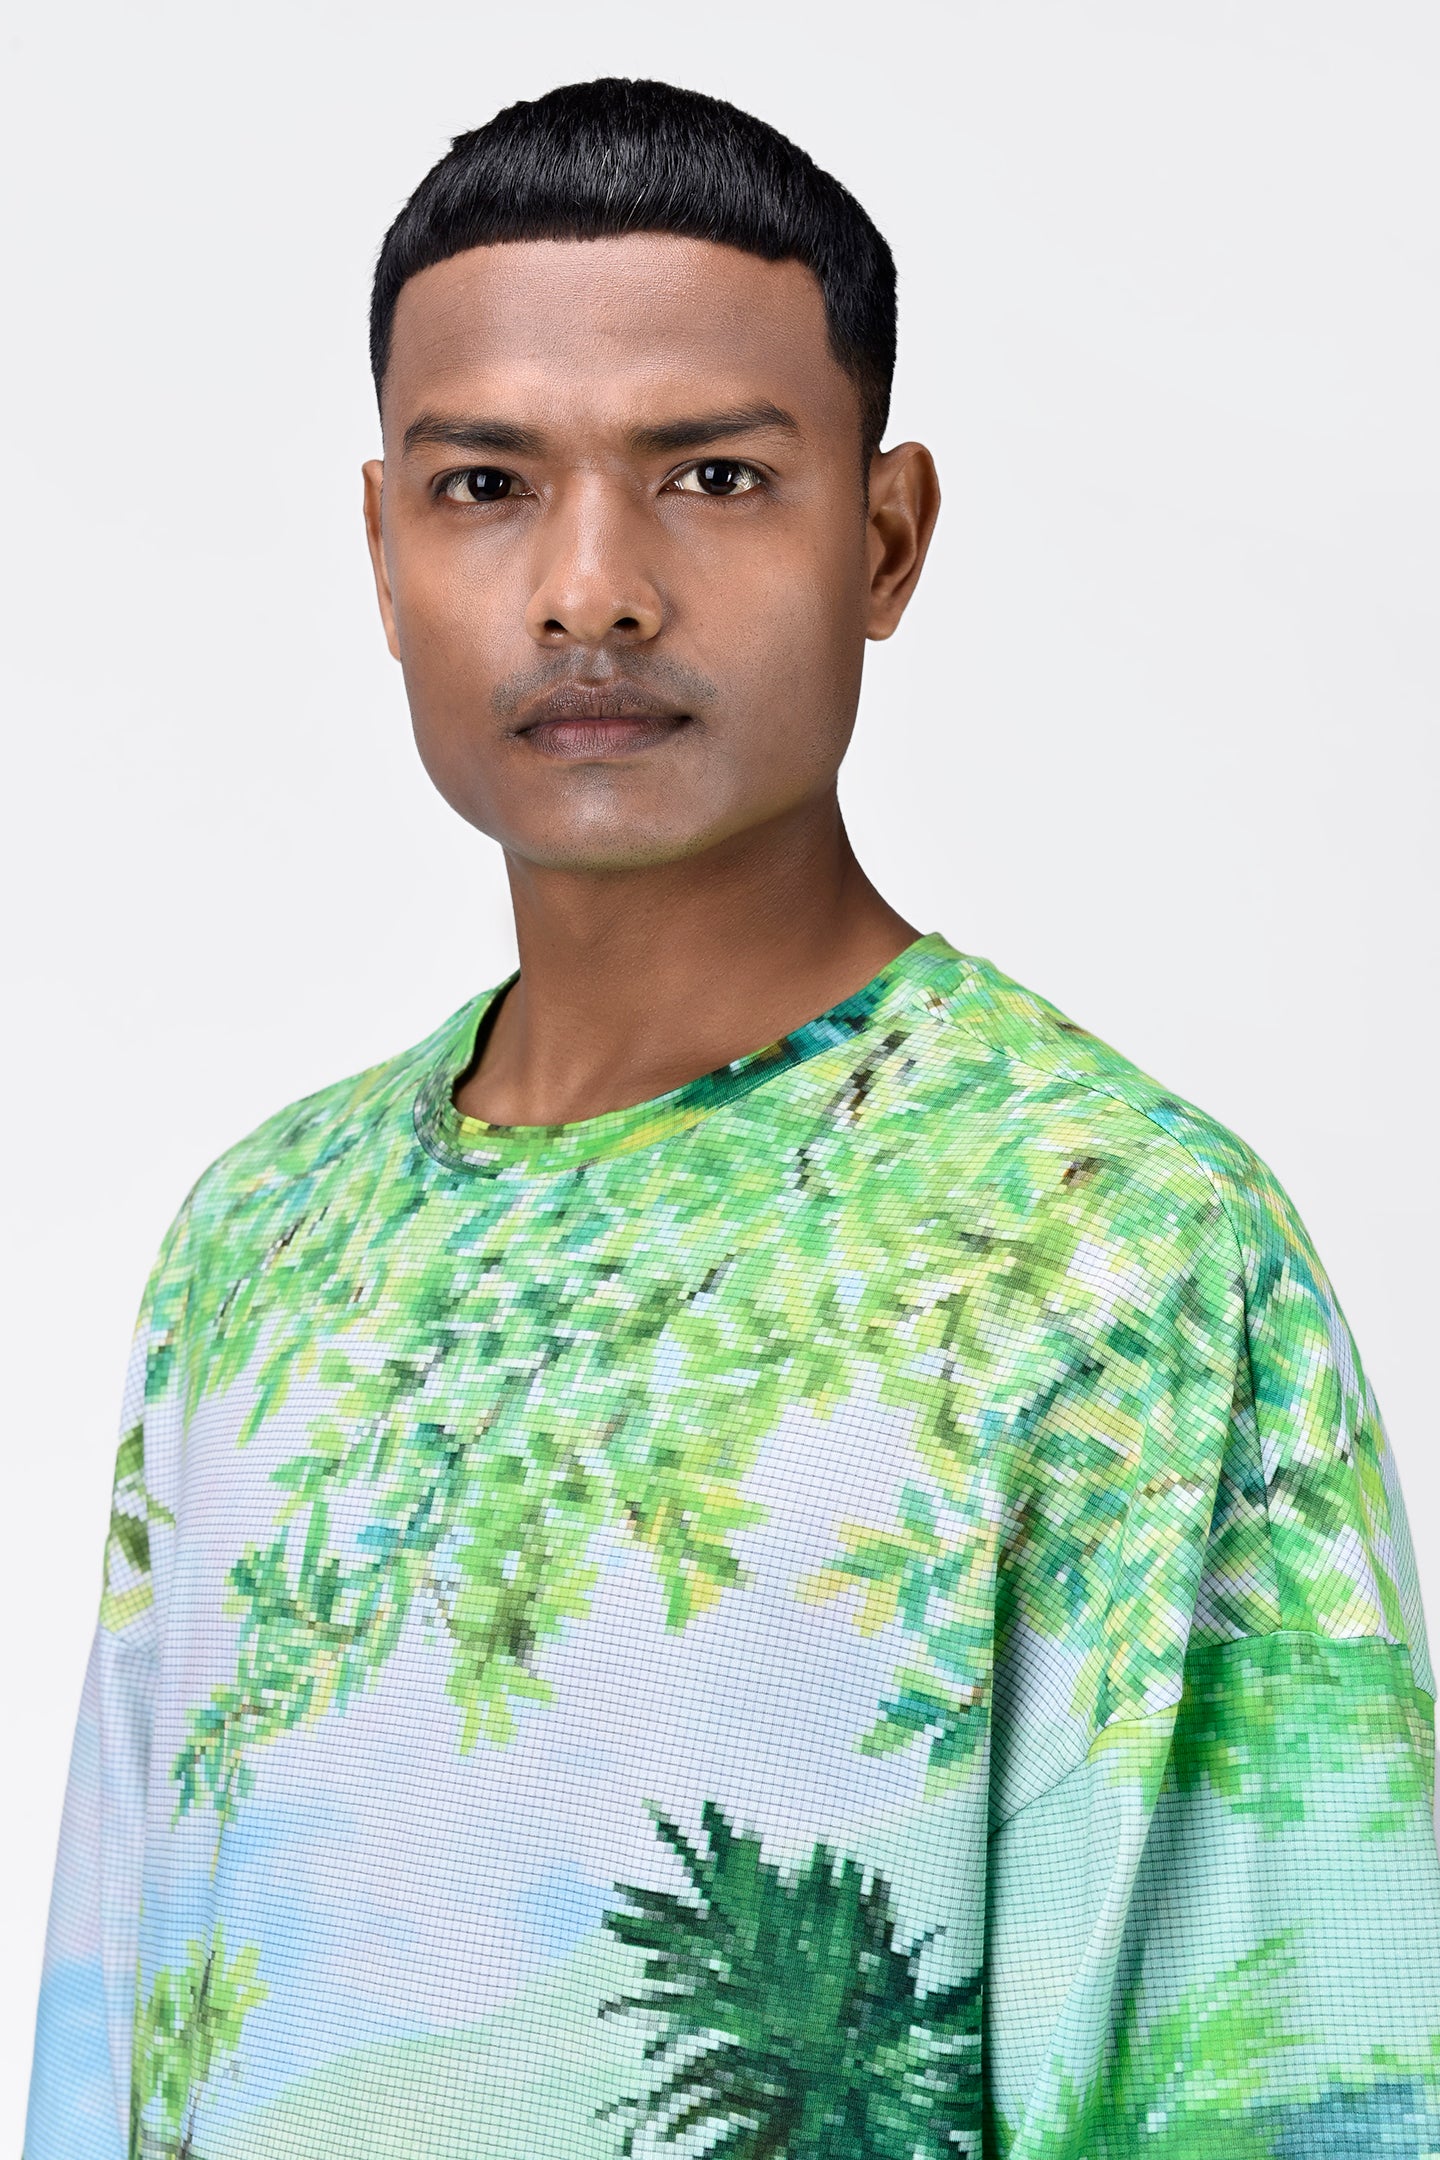 Men's Oversized Pixelated Landscape Print T-Shirt